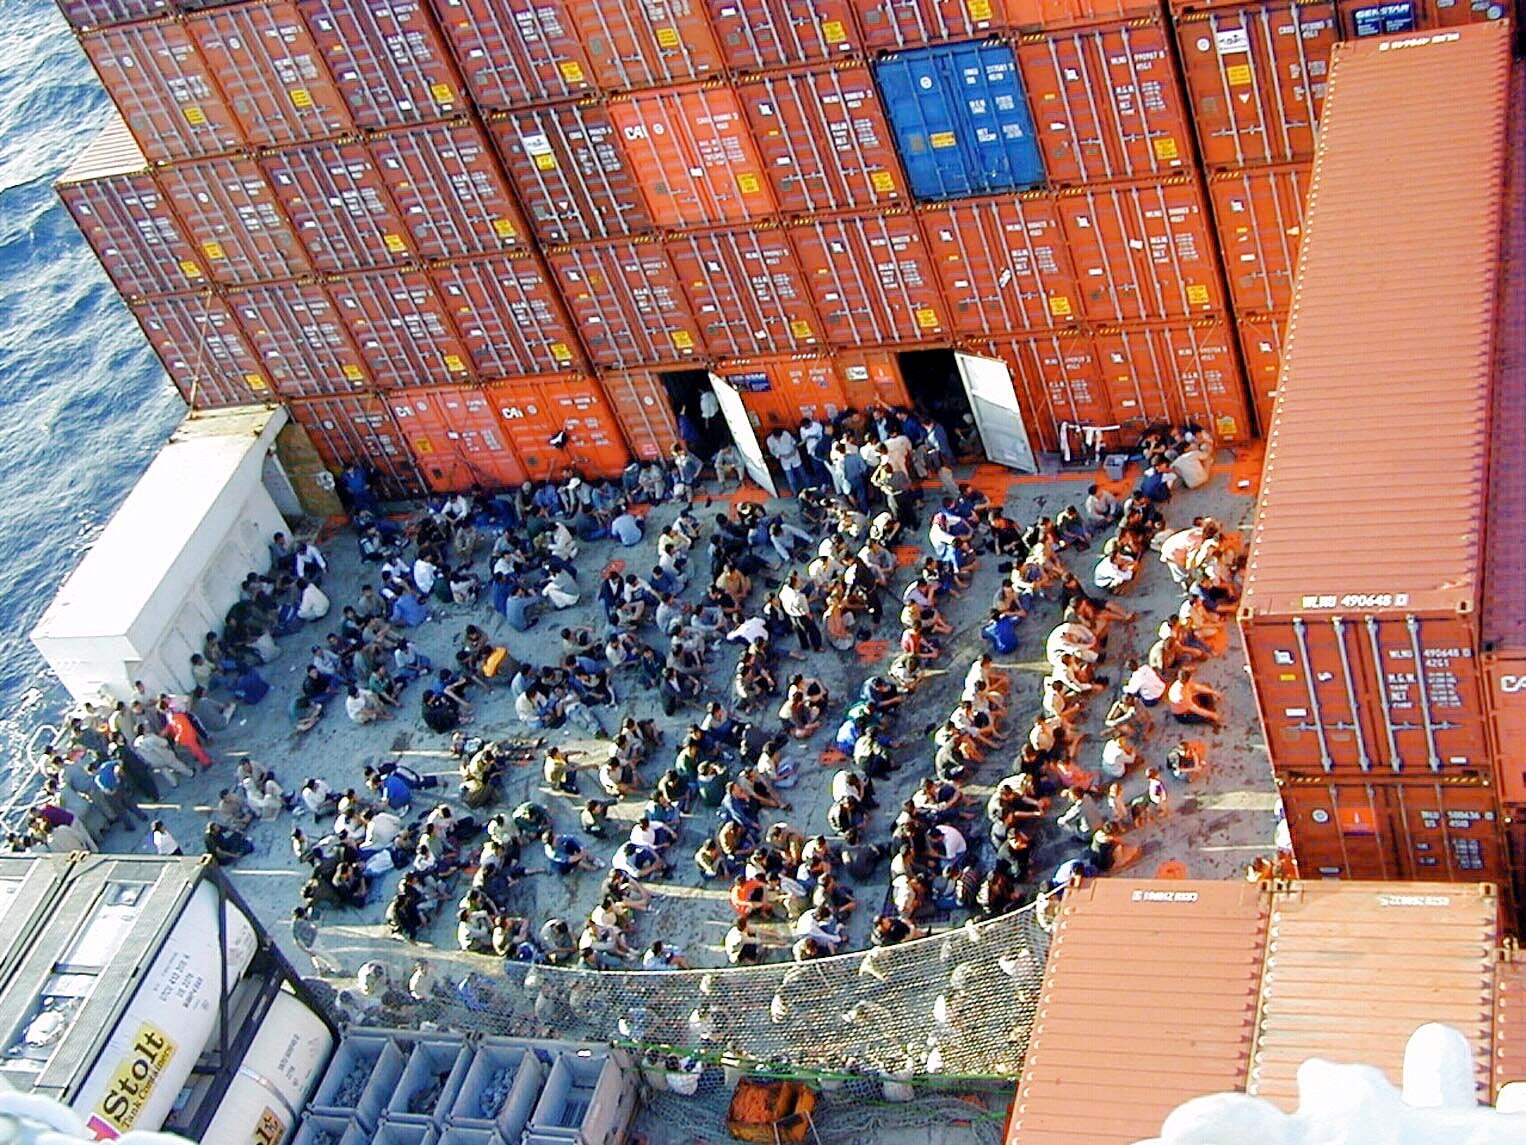 438 asylum seekers onboard the Norwegian cargo ship Tampa in August, 2001.